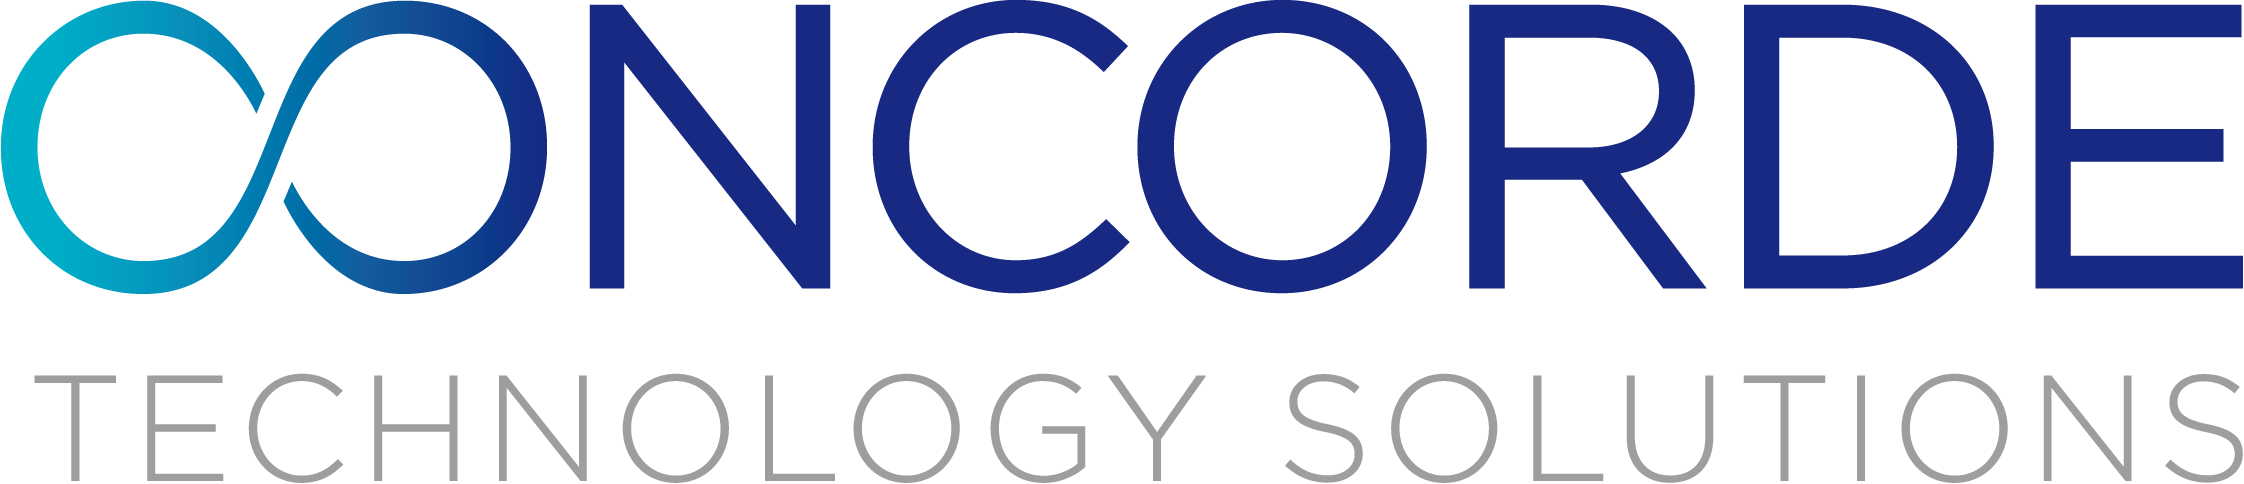 Concorde Technology Group Logo